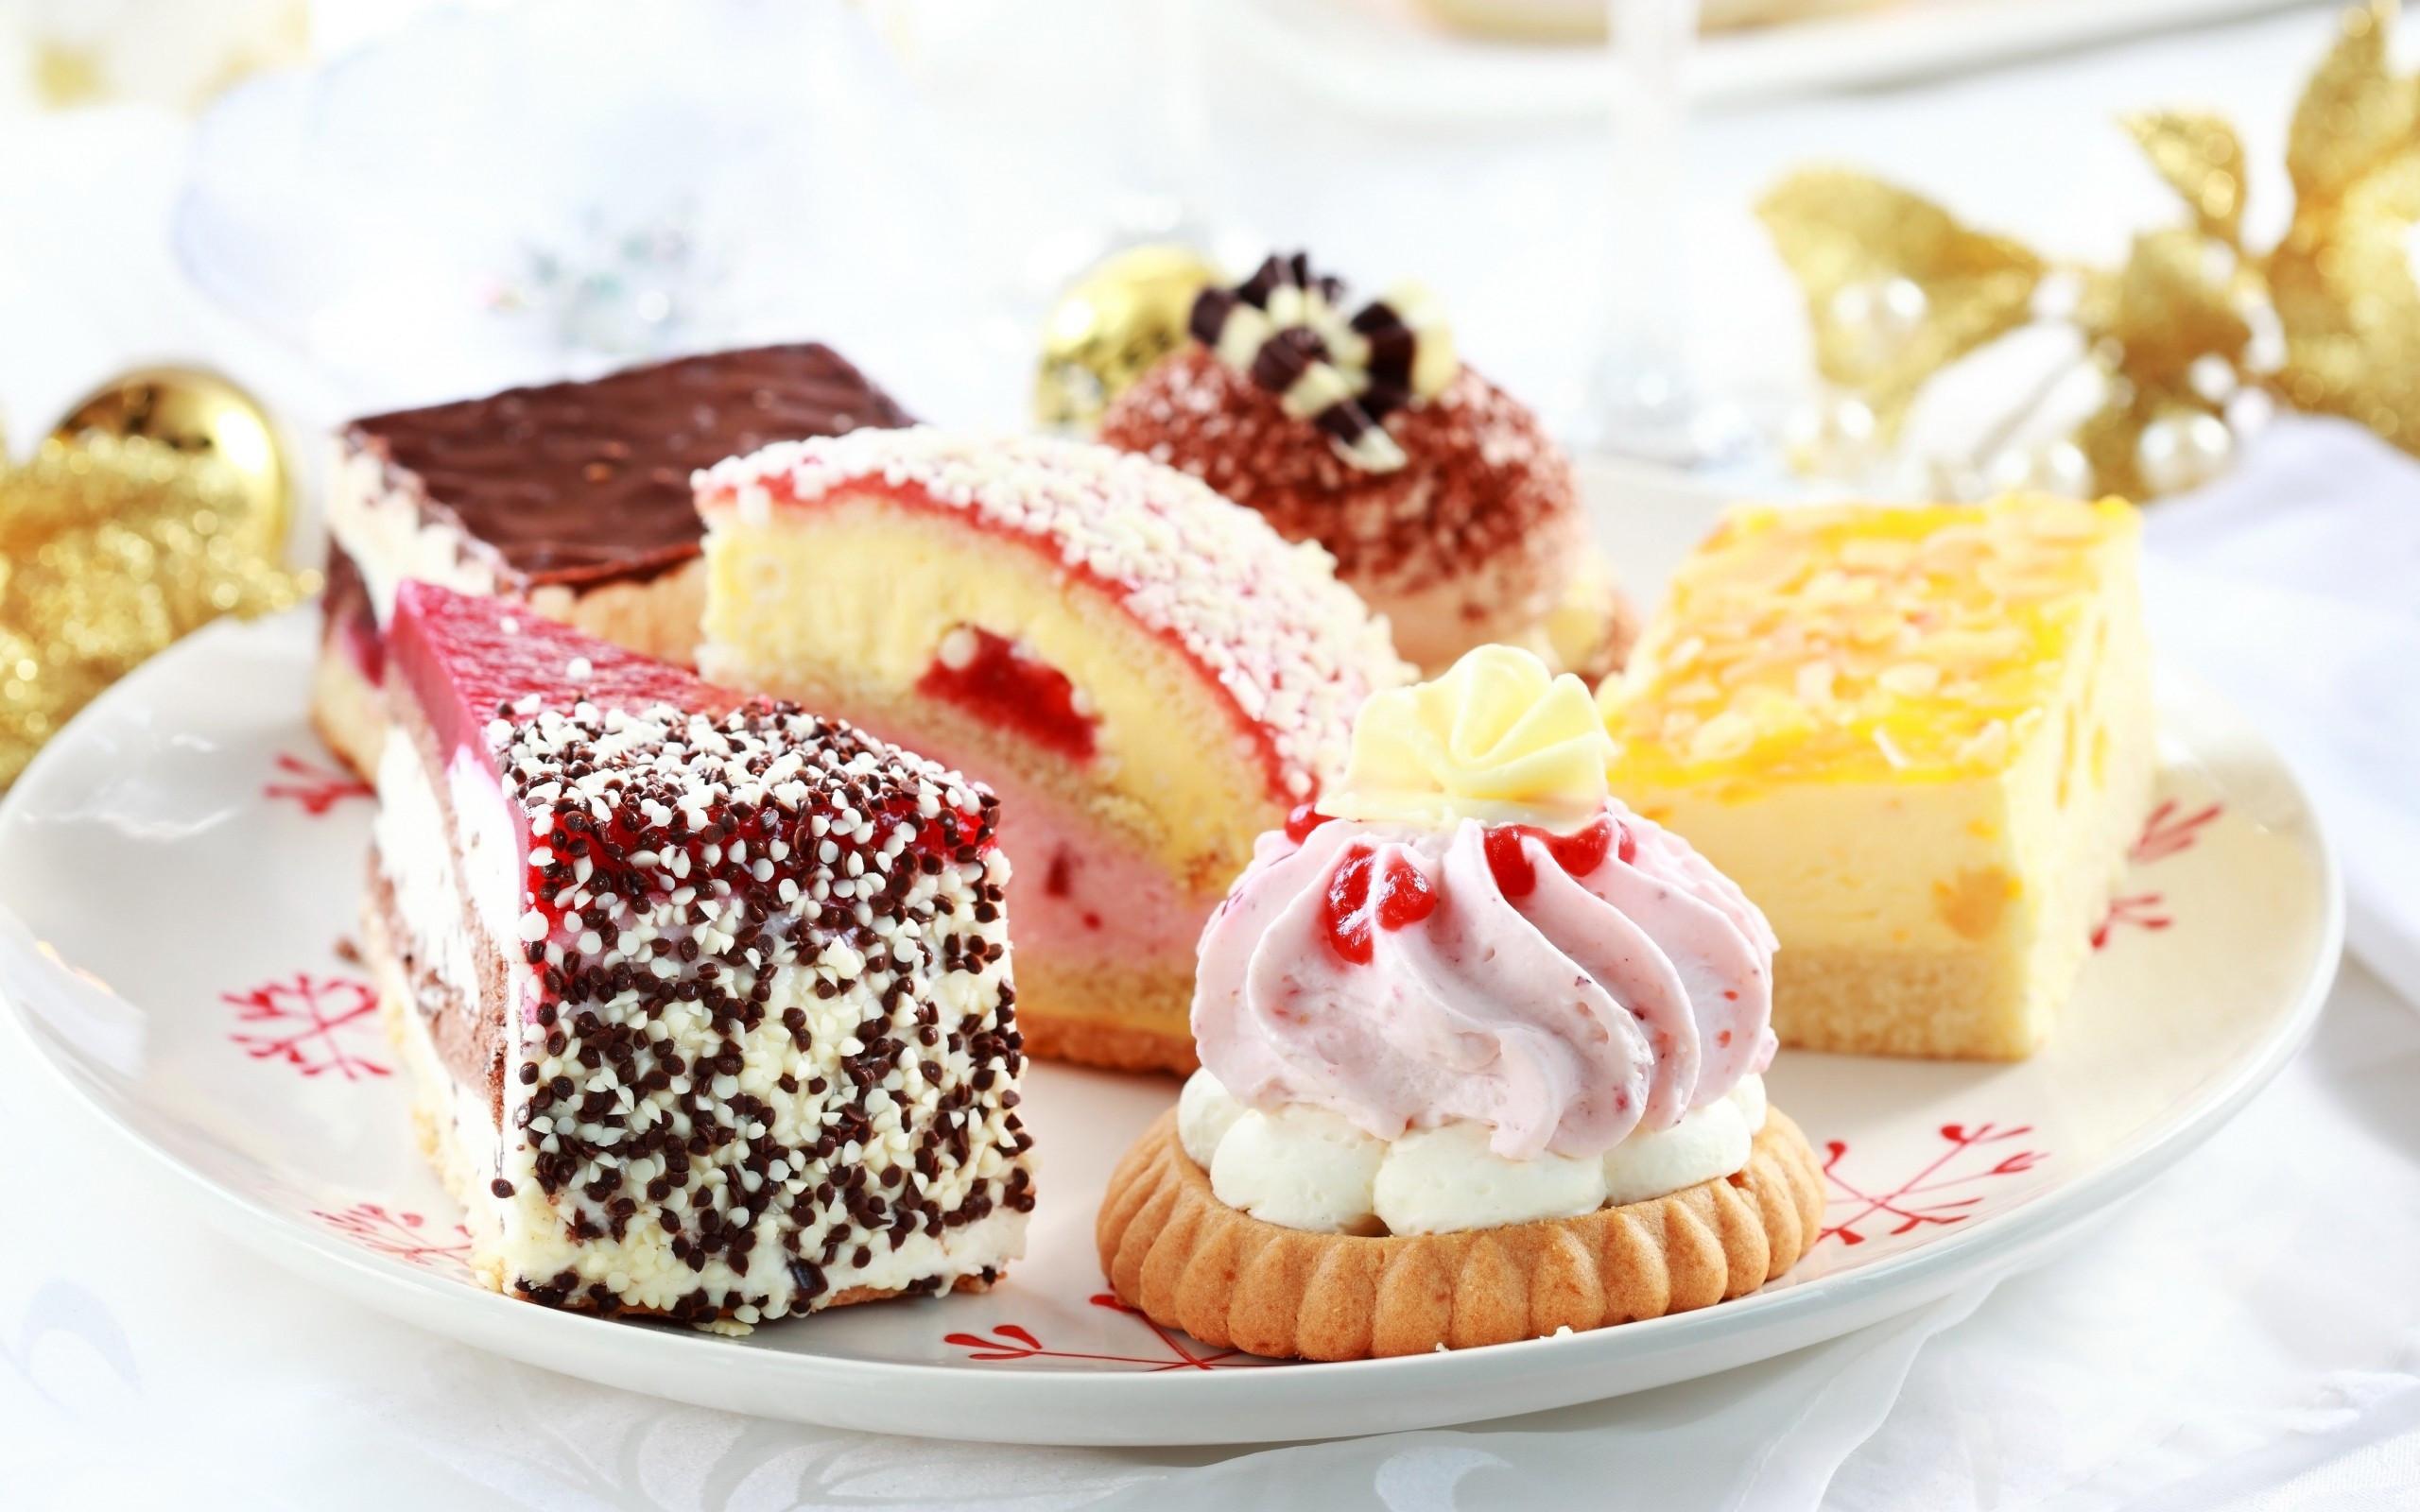 Cakes, Pastries, Desserts 2560x1600 wallpaper